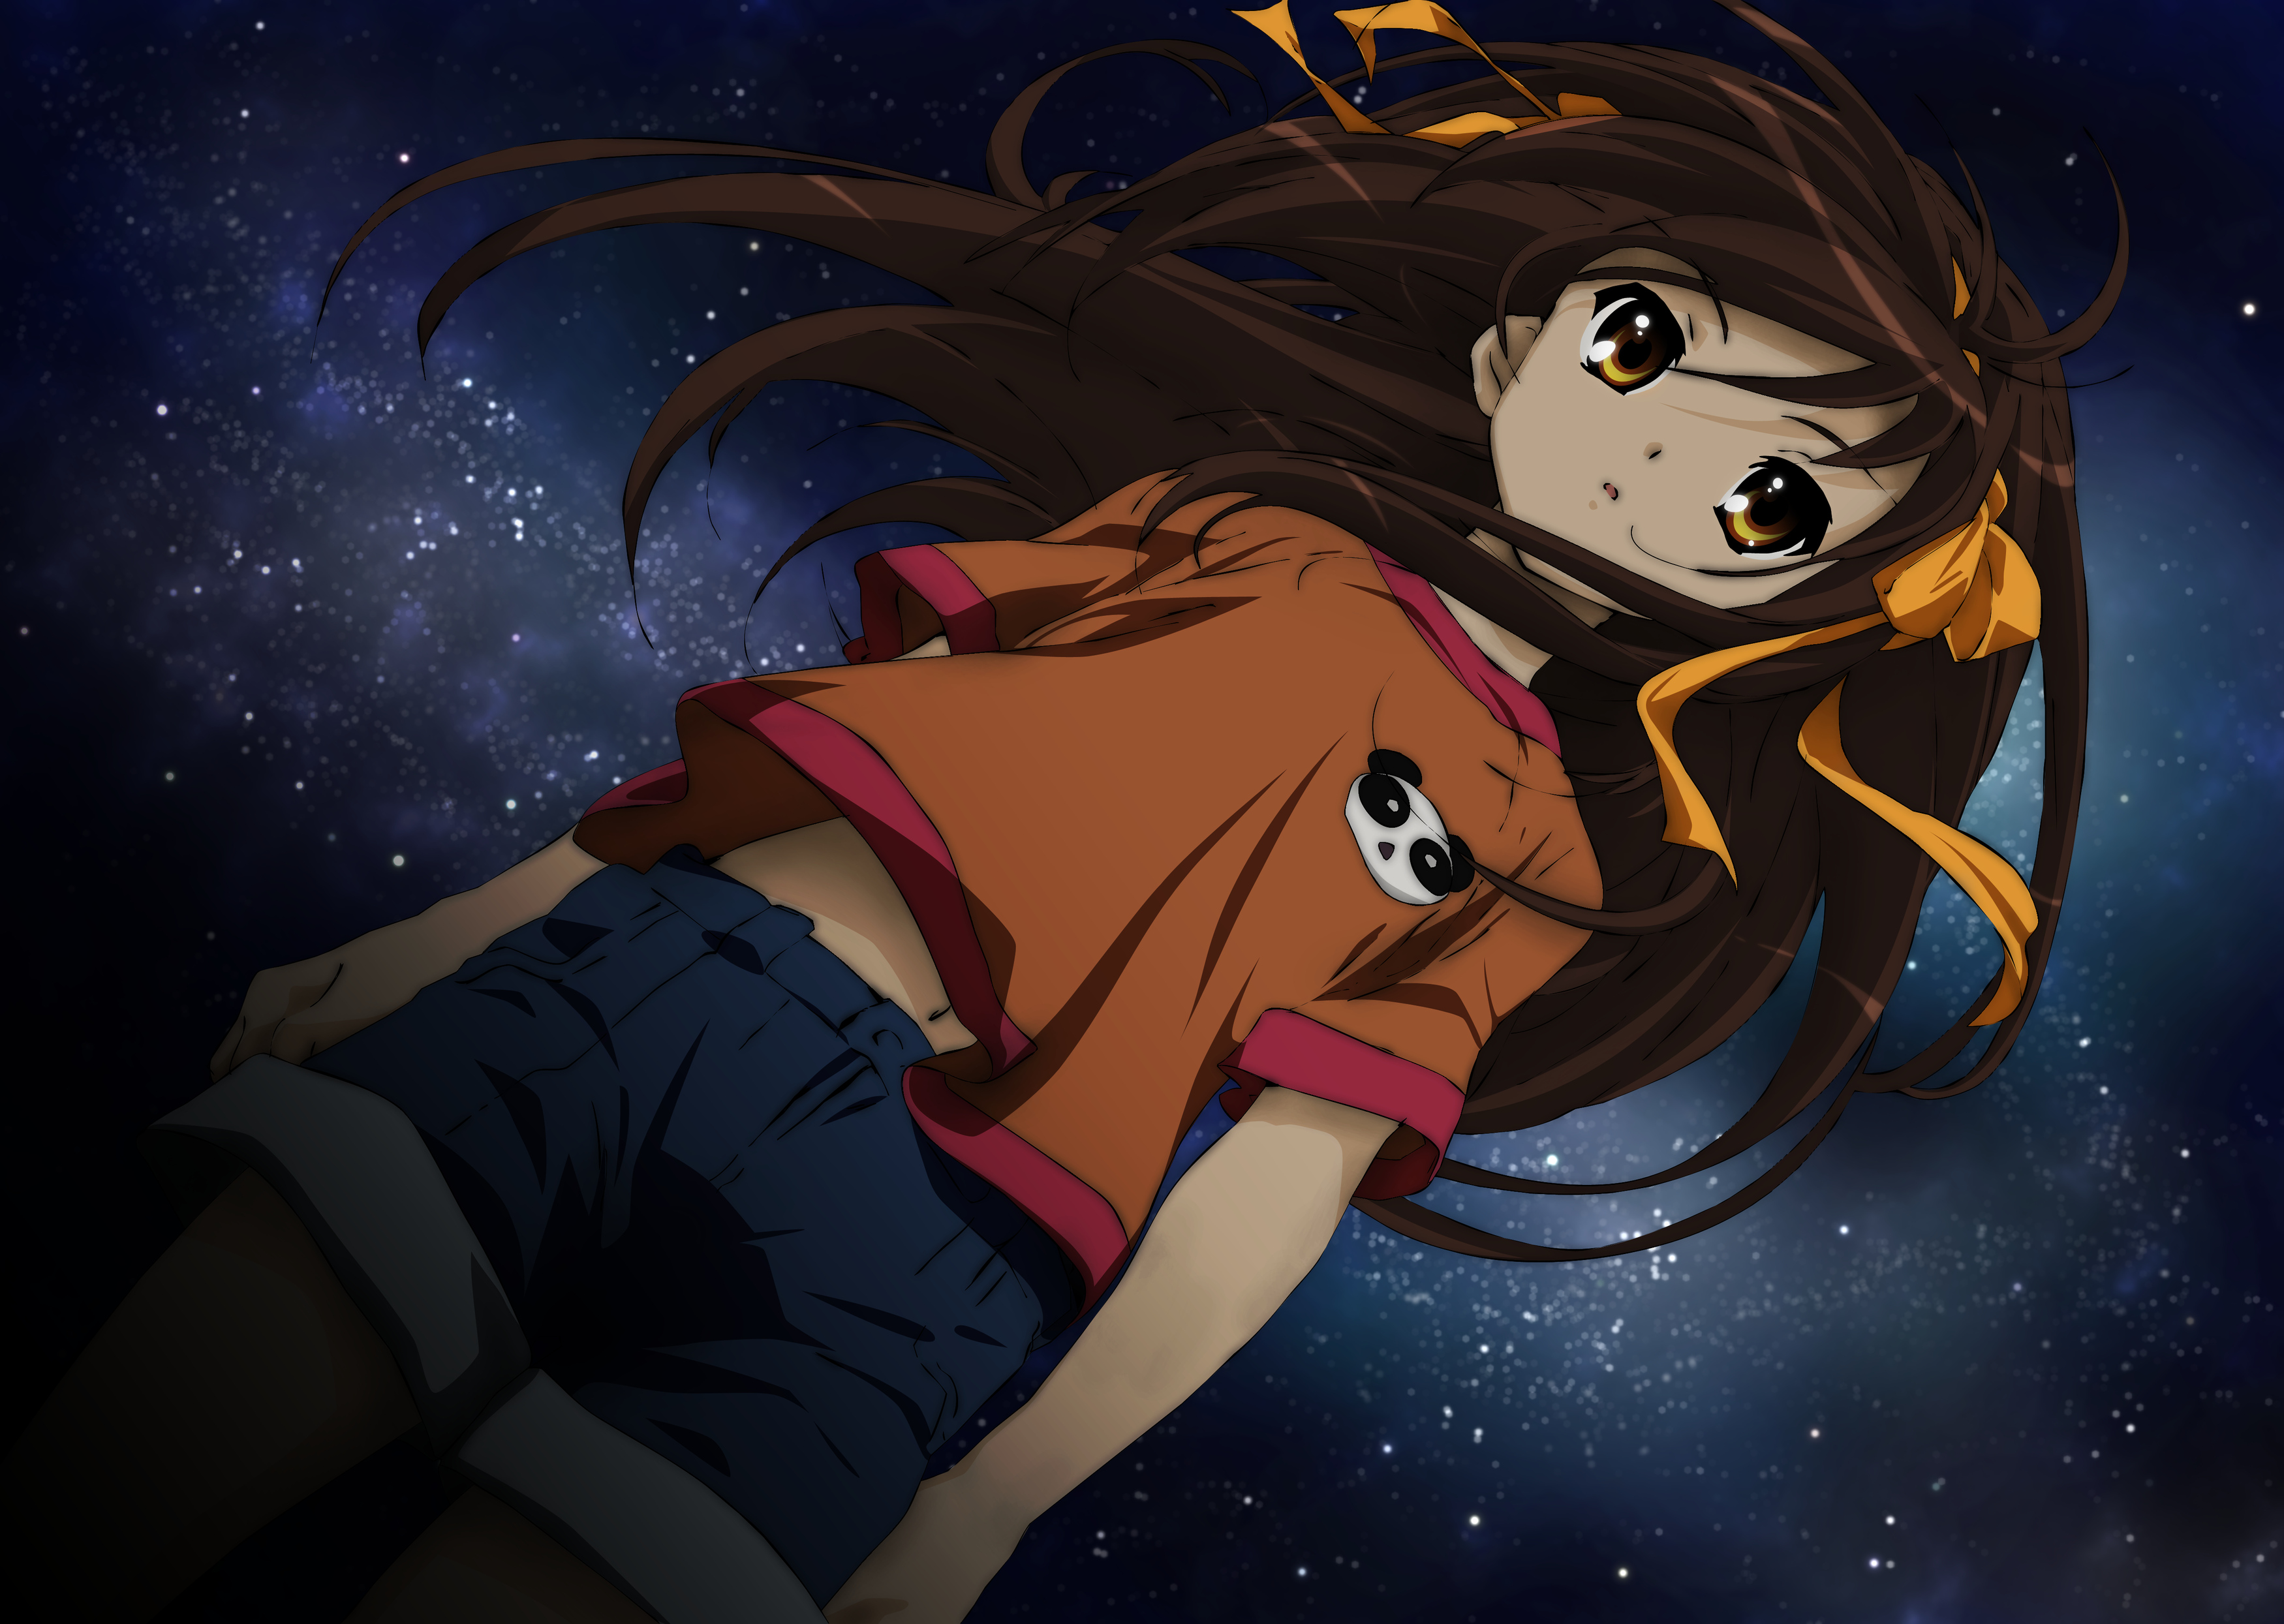 Bakgrundsbilder Haruhi Suzumiya Anime Unga kvinnor ung kvinna